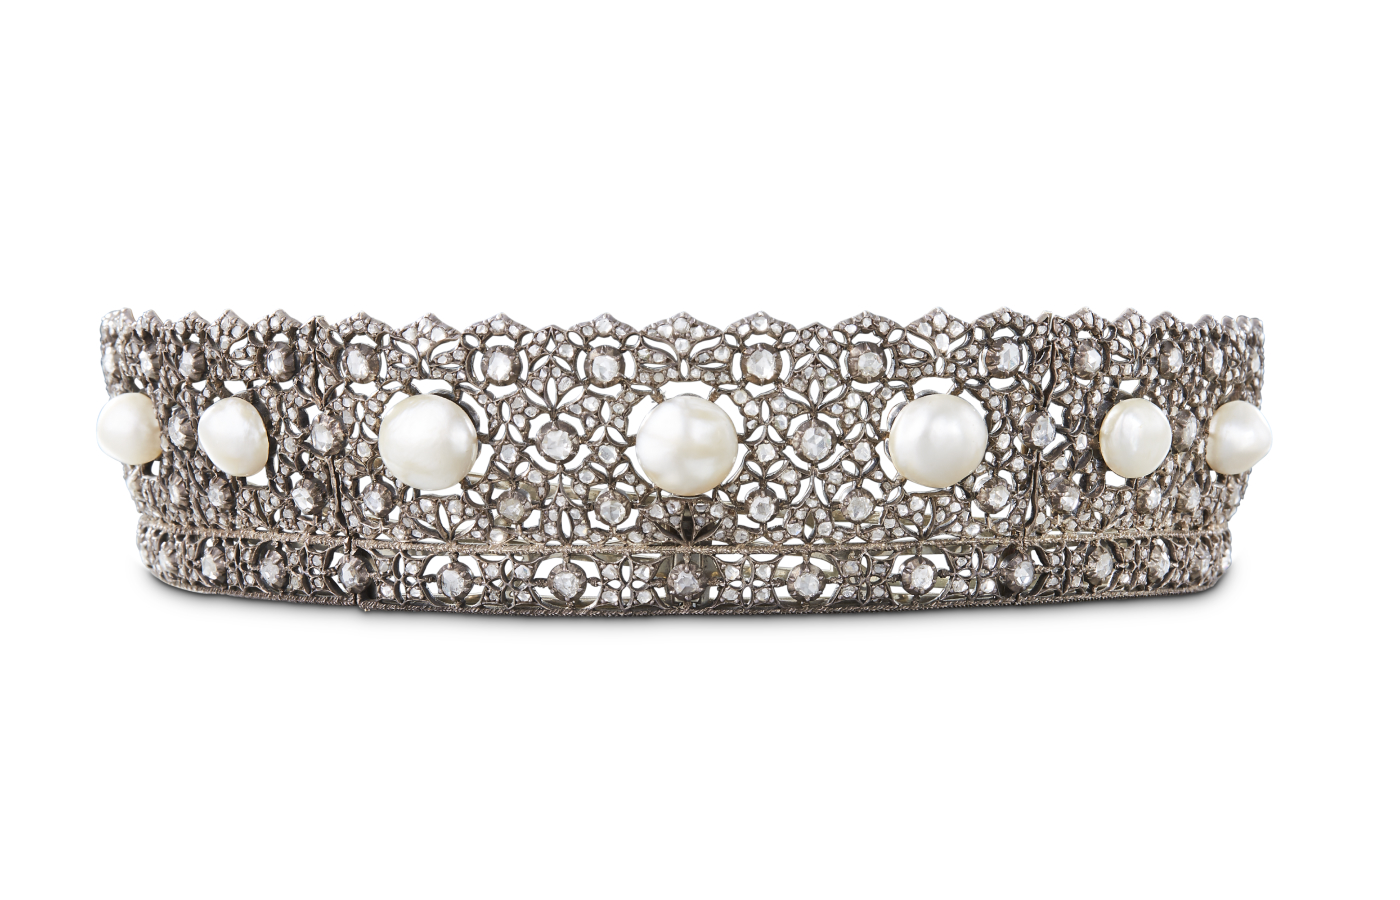 Buccellati gold-lined silver, pearl and diamond tiara designed by Mario Buccellati